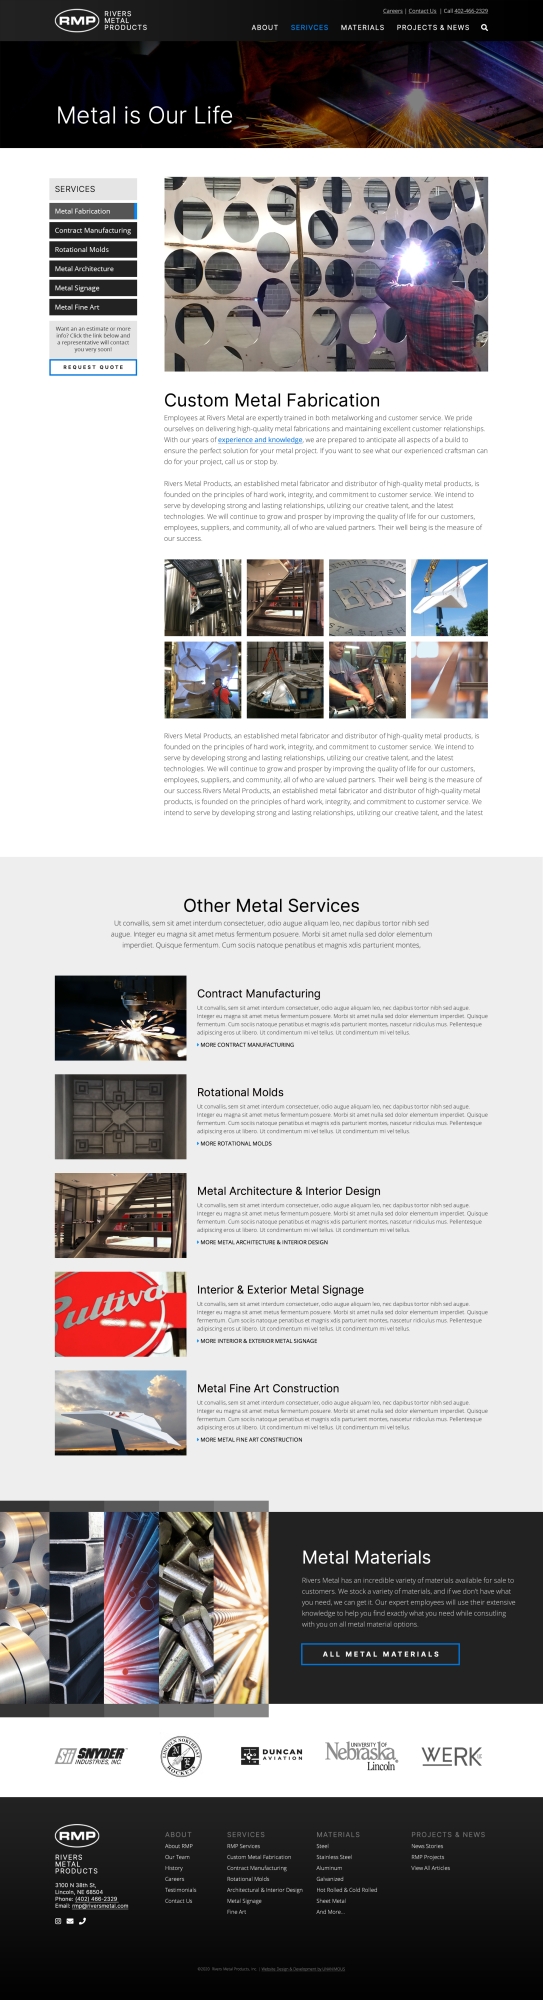 rivers metal website design services detail